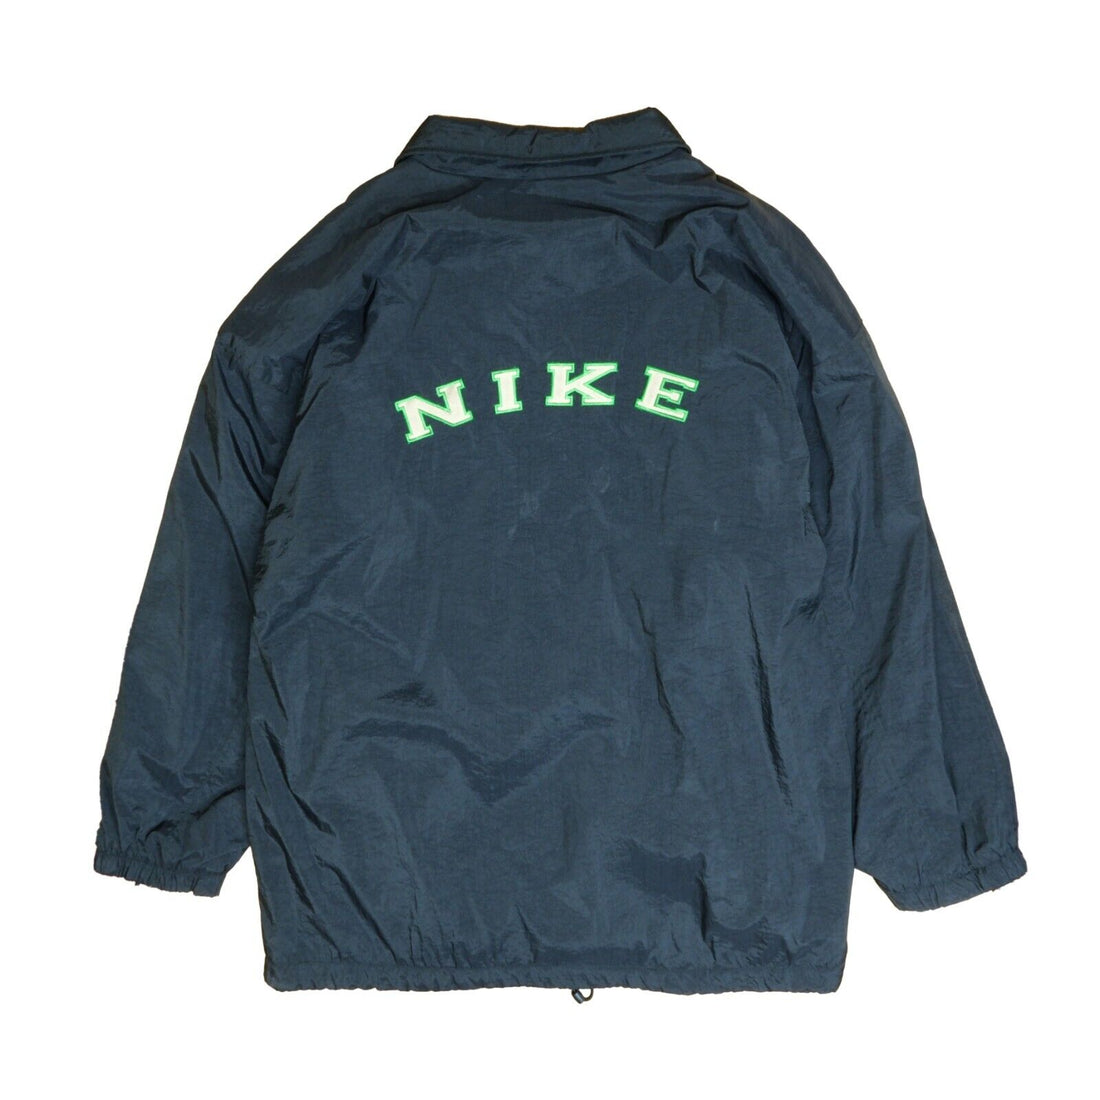 Vintage Nike Light Jacket Size XL Black Sherpa Lined Embroidered Swoosh 90s